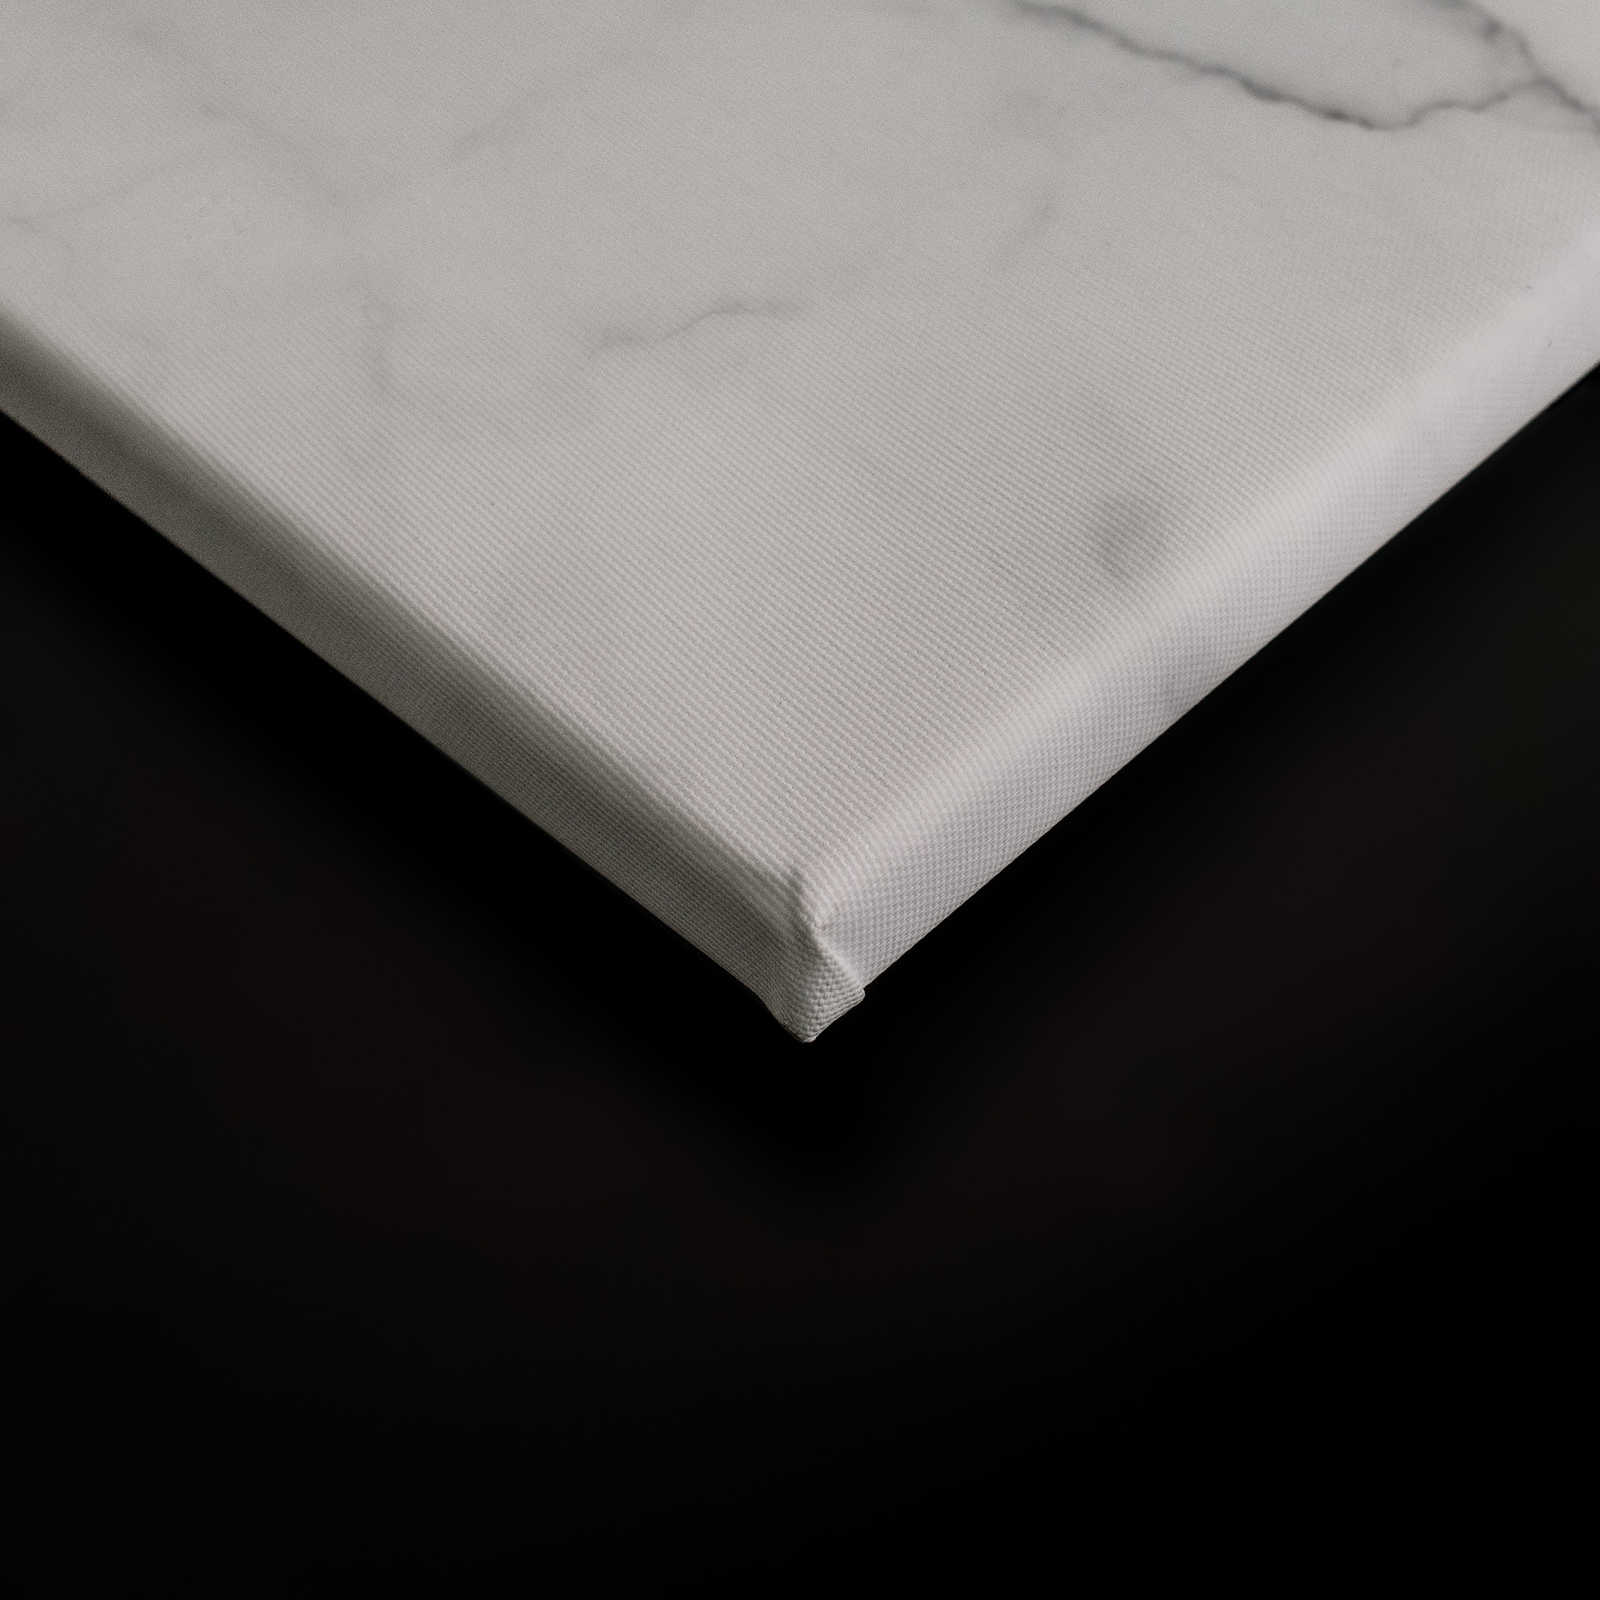             Lienzo con sutil aspecto de mármol - 0,90 m x 0,60 m
        